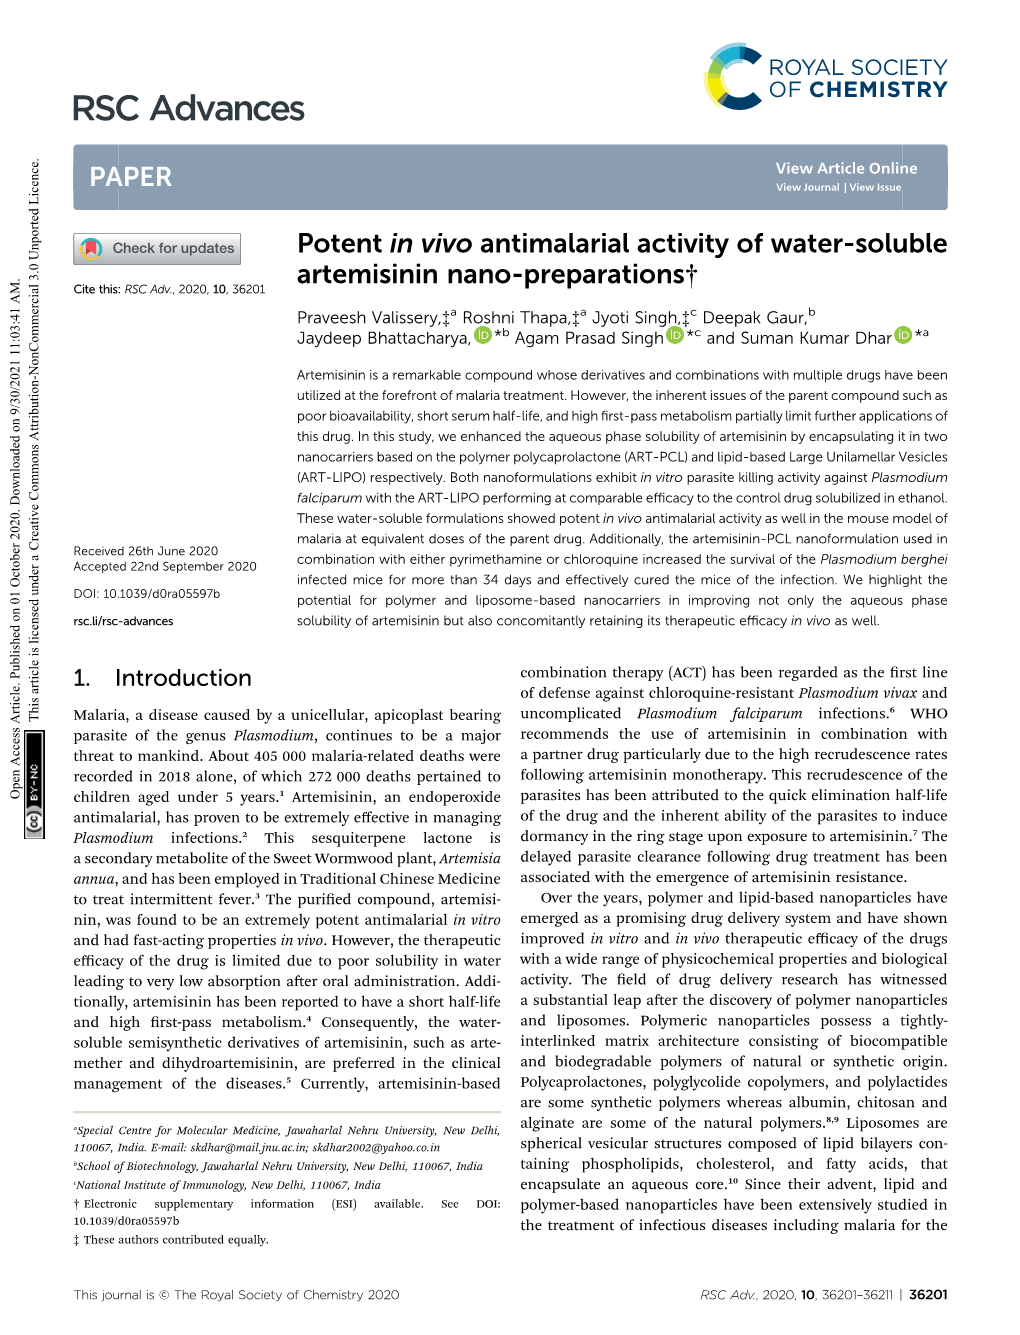 Potent in Vivo Antimalarial Activity of Water-Soluble Artemisinin Nano